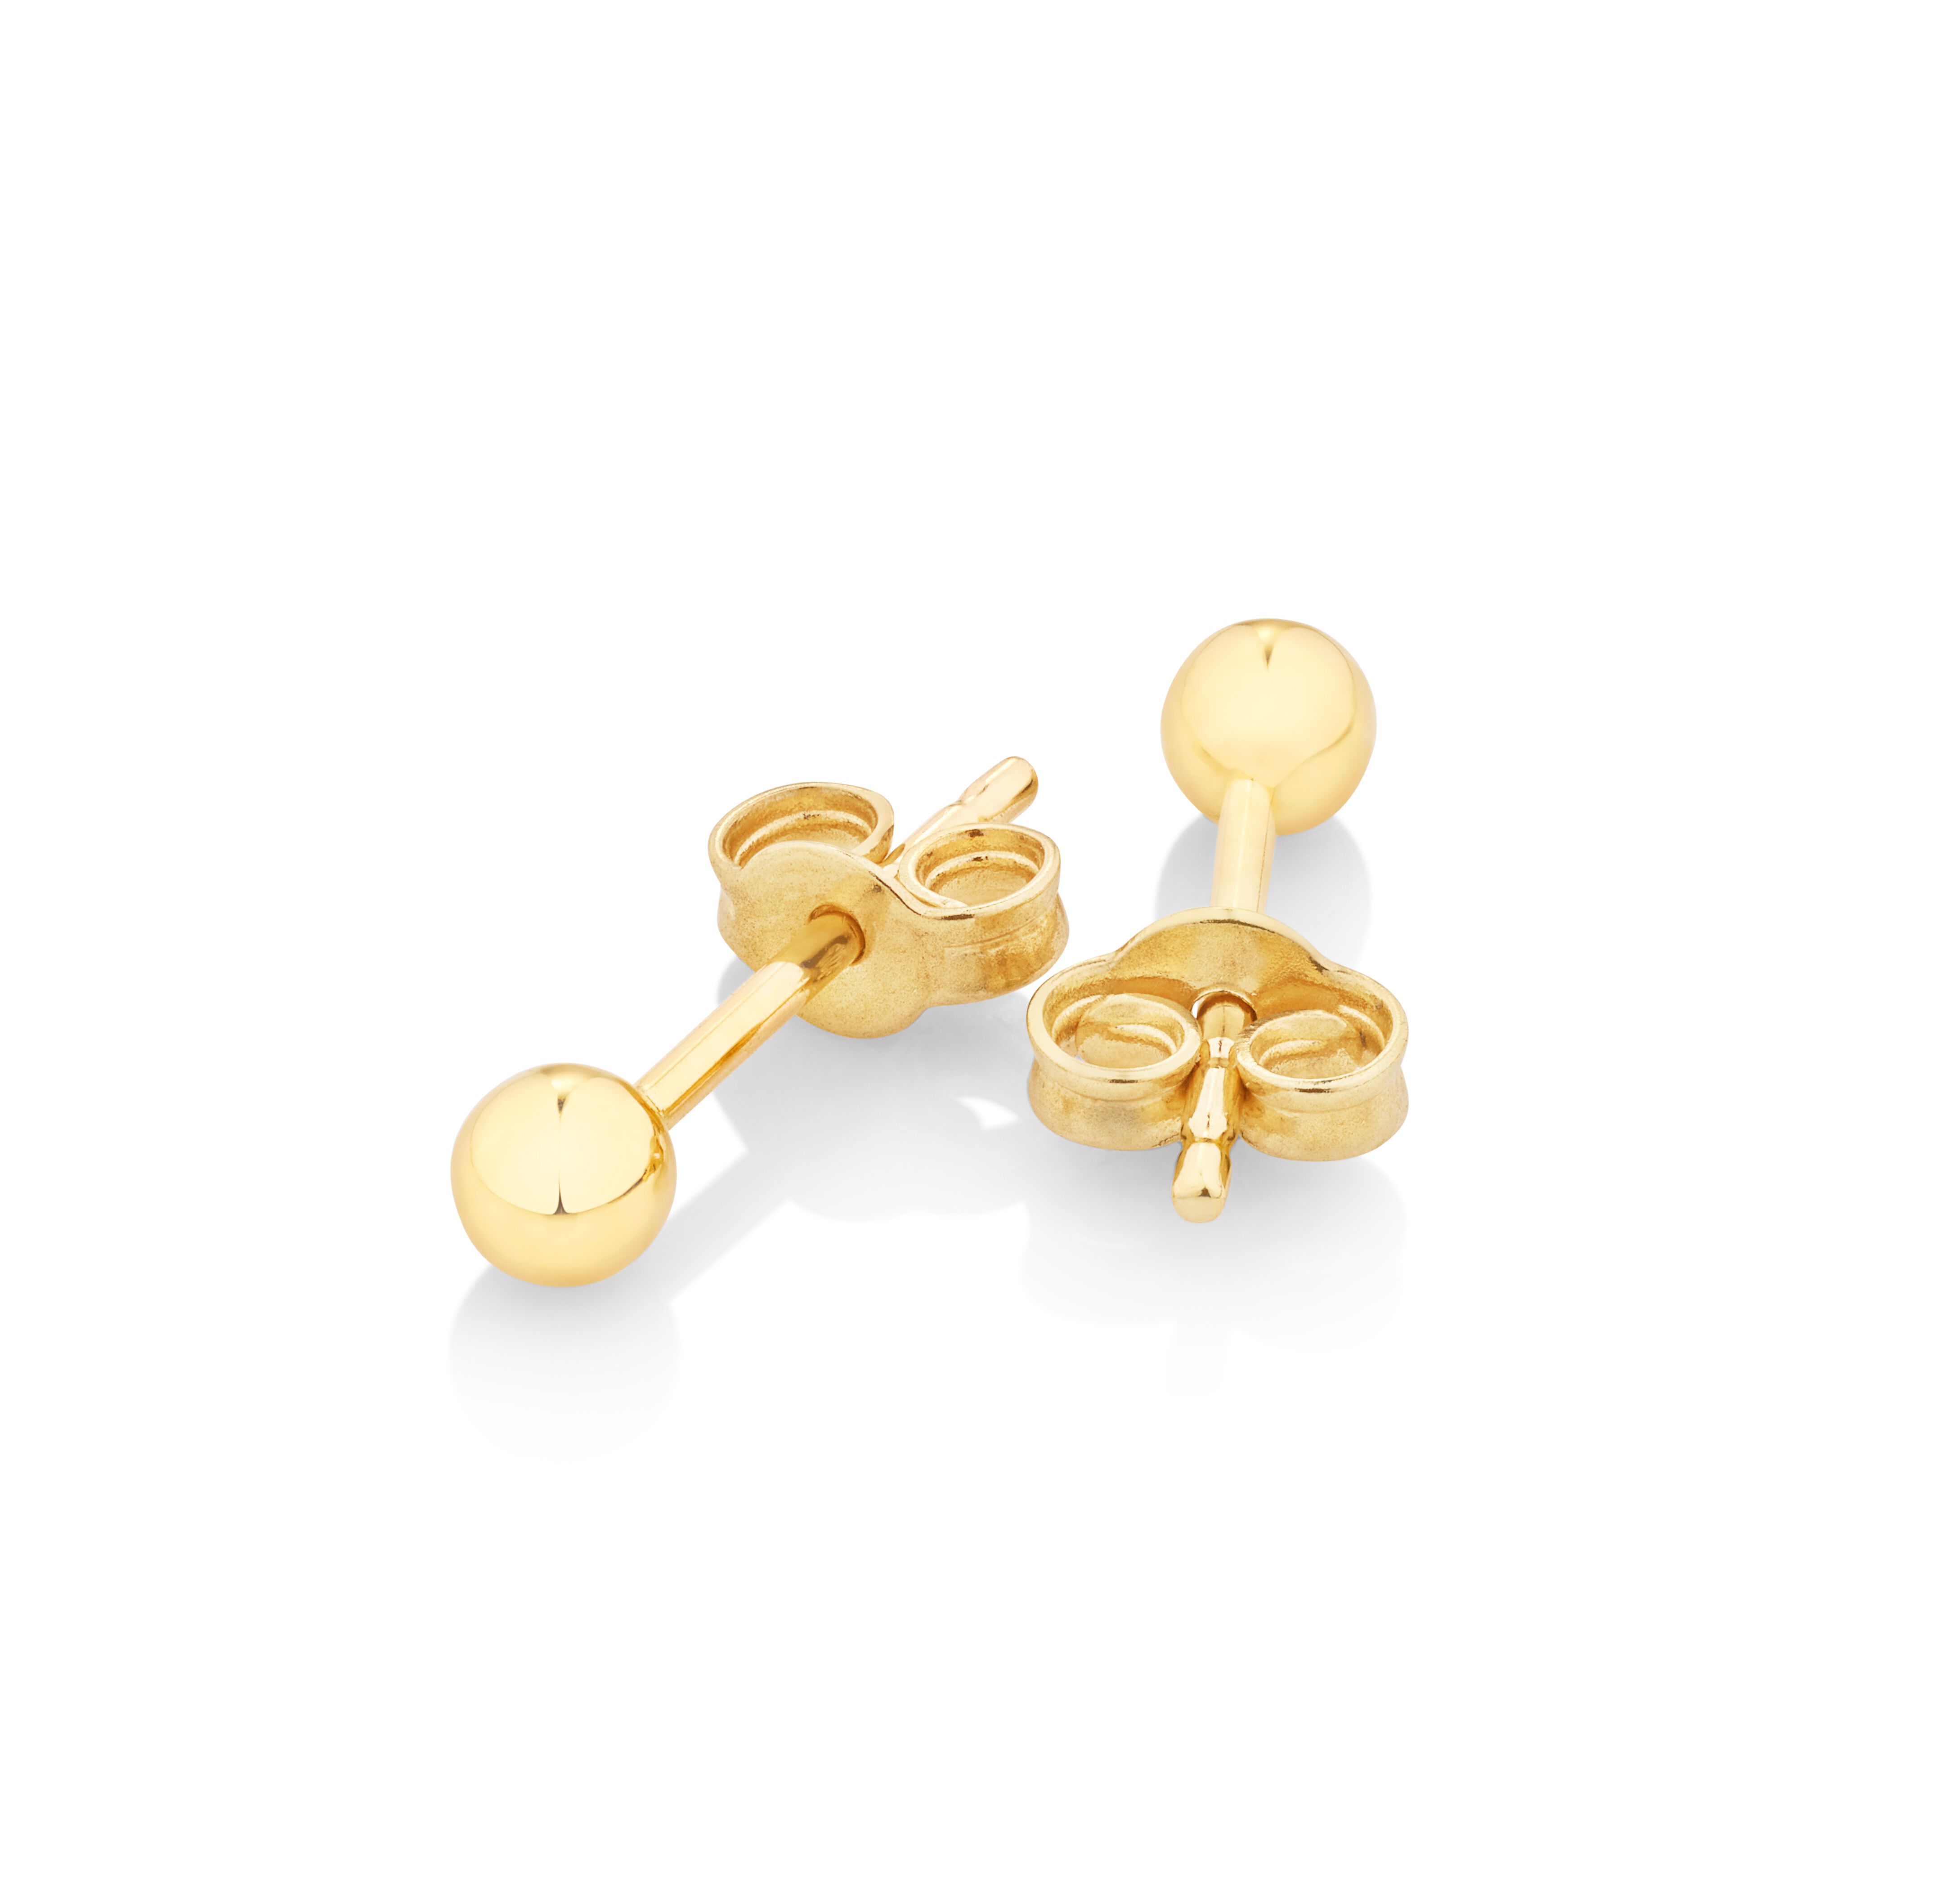 3mm Ball Stud Earrings in 10kt Yellow Gold